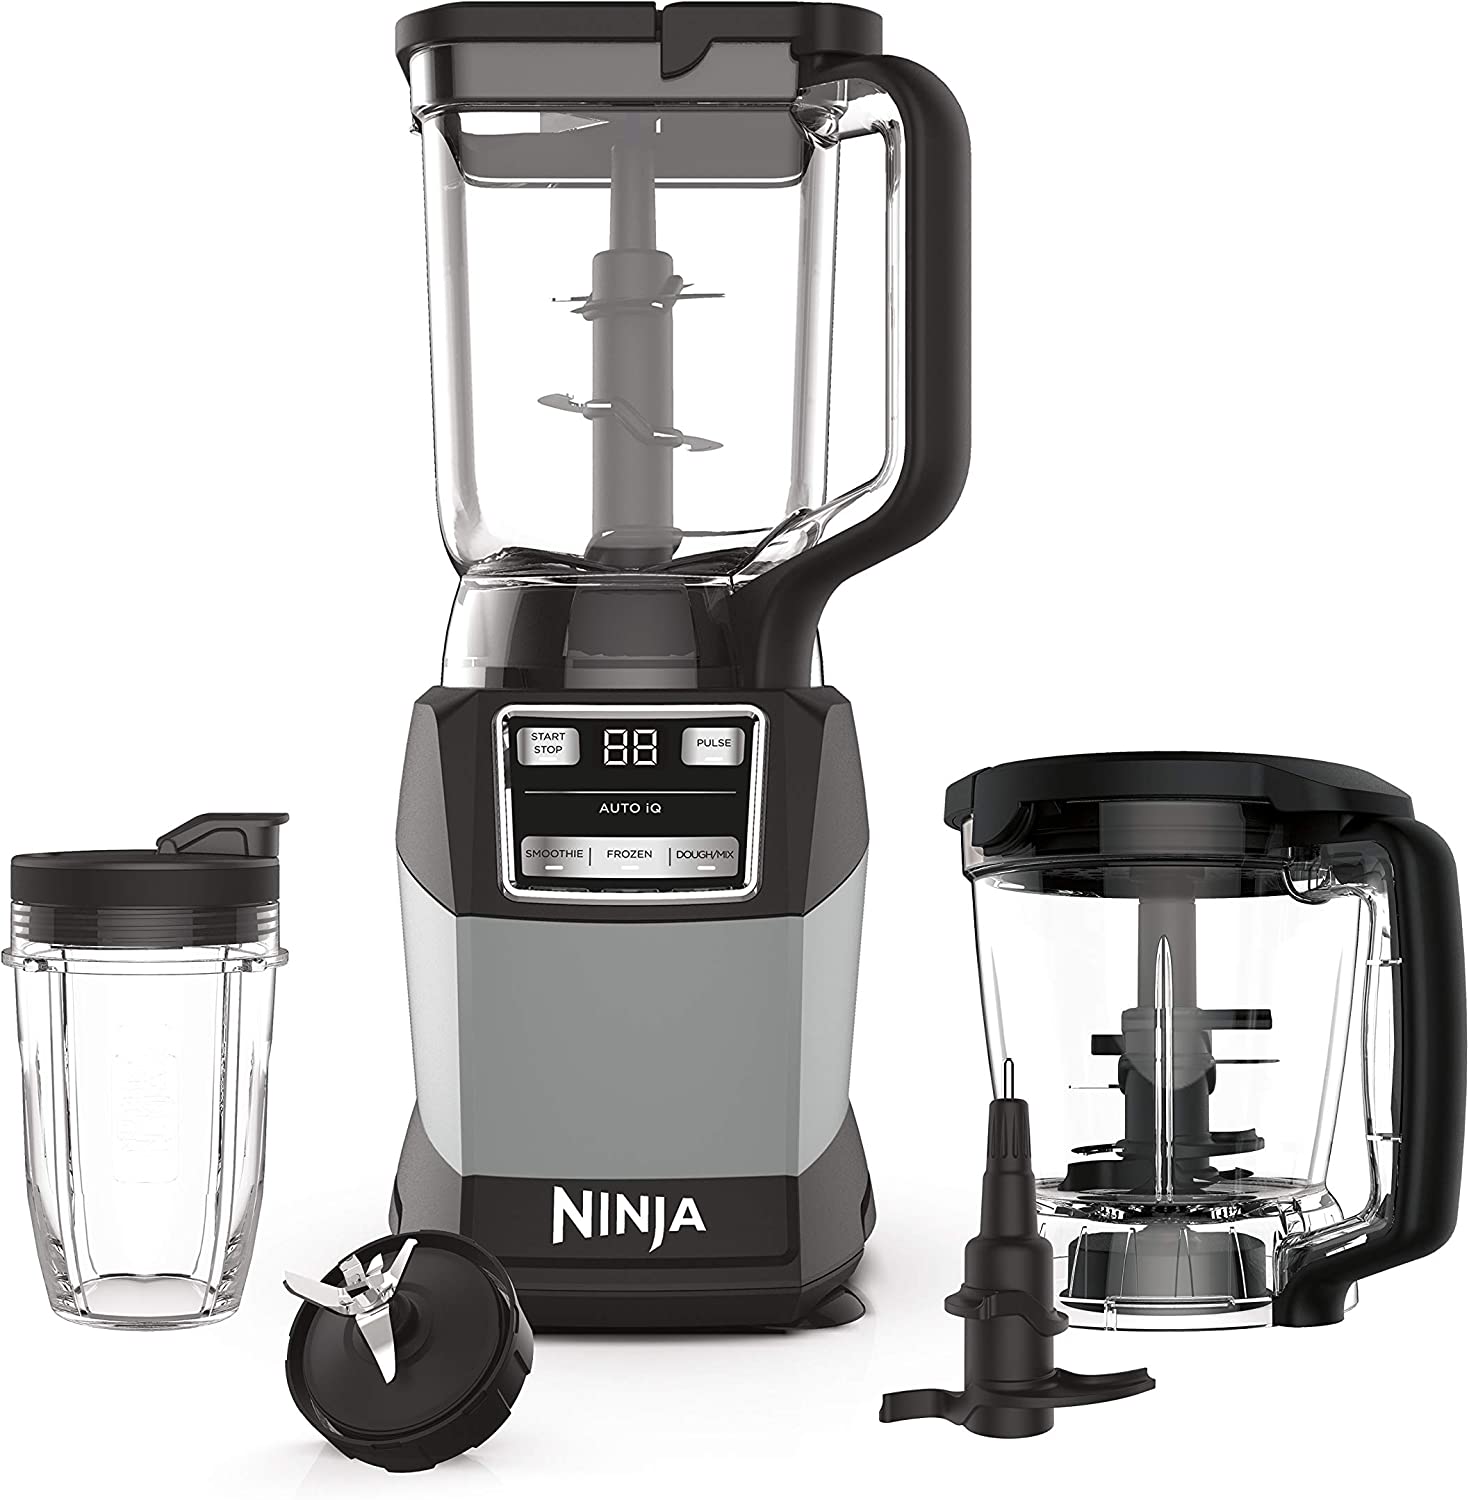 Ninja Compact Kitchen System - $109.99